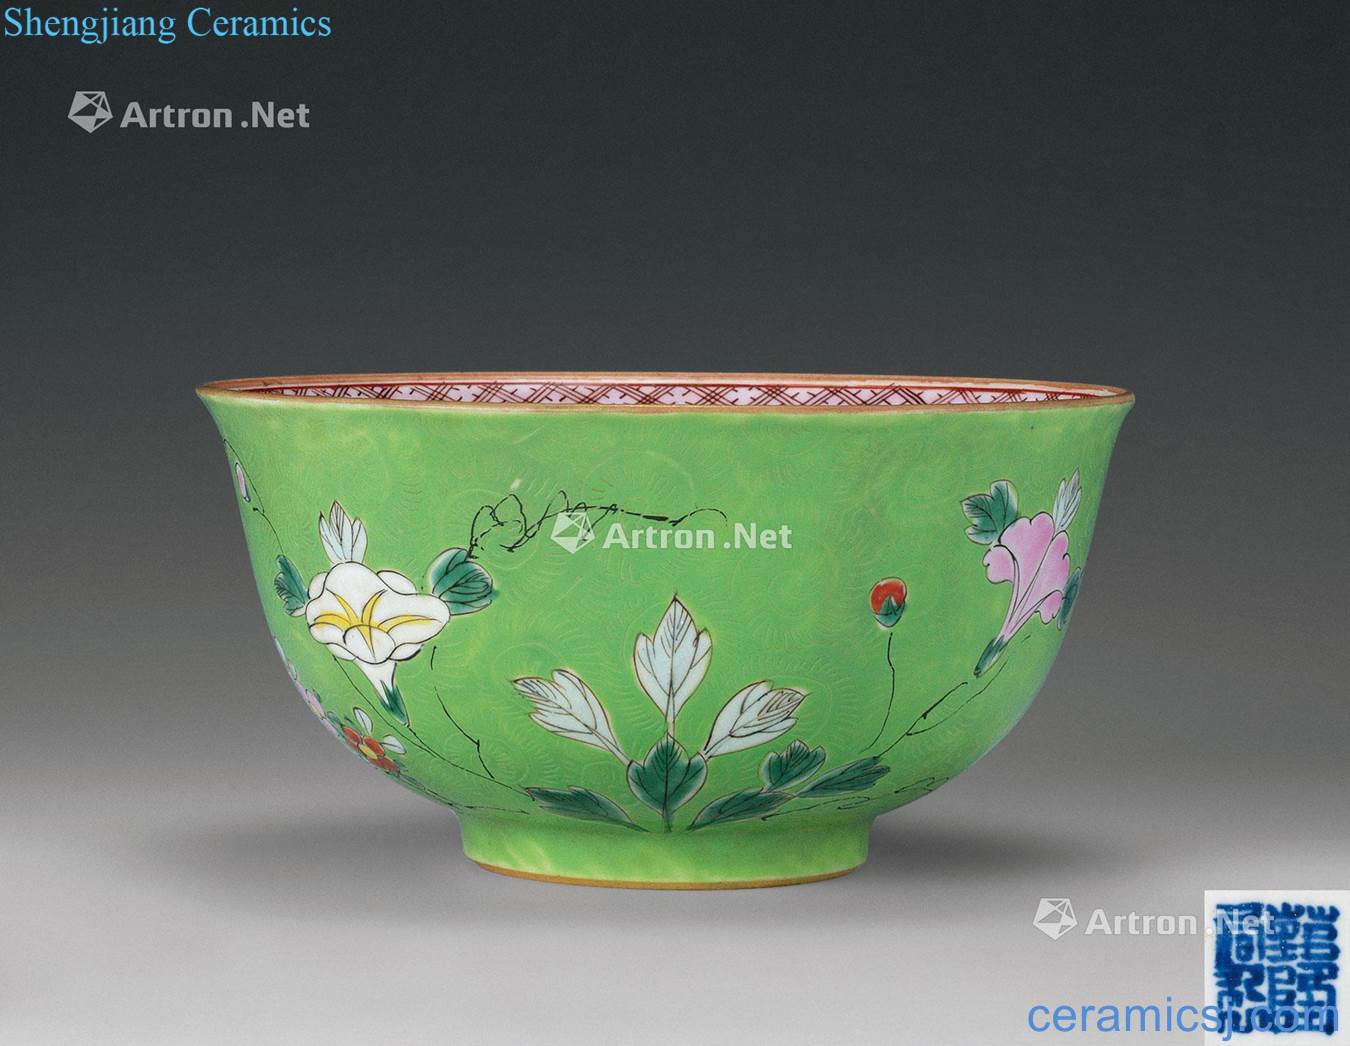 Qing emperor qianlong (1736-1795), pastel rolling flower green-splashed bowls